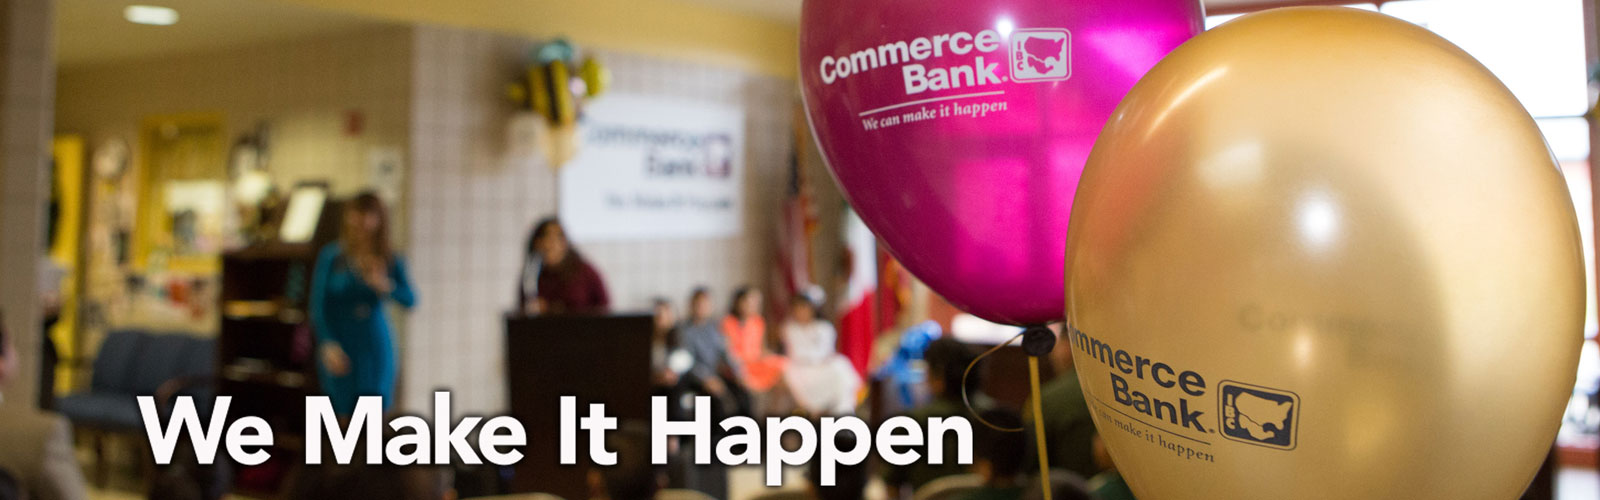 We Make it Happen Commerce Bank